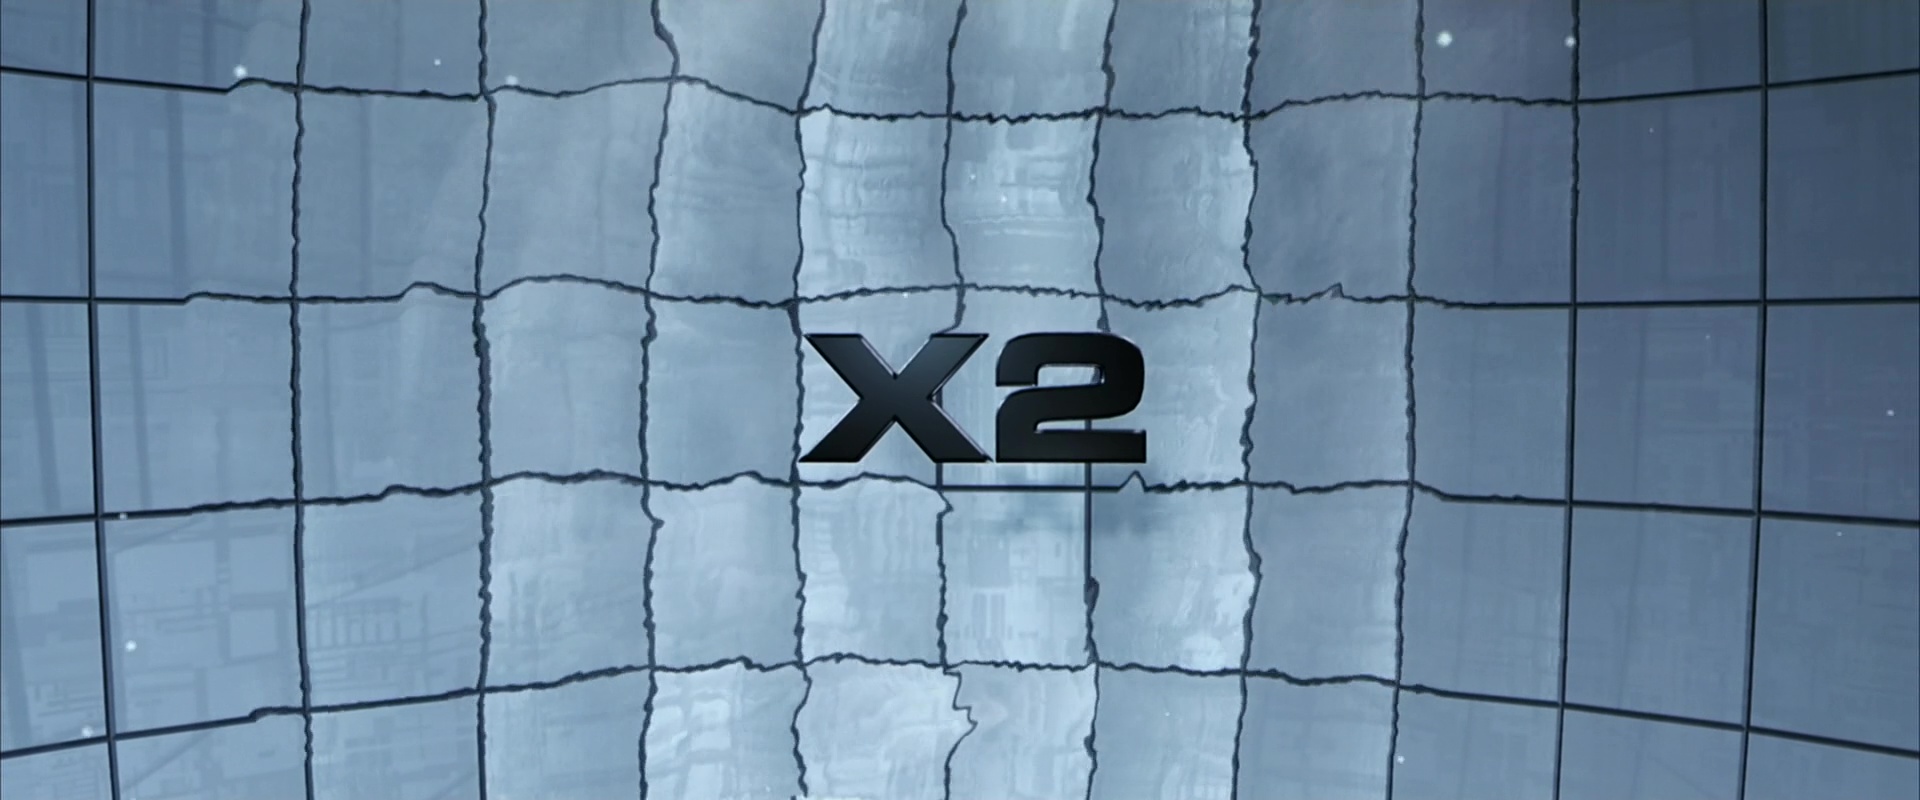 X-MEN 2 (X2: X-Men United) de Bryan Singer (2003)